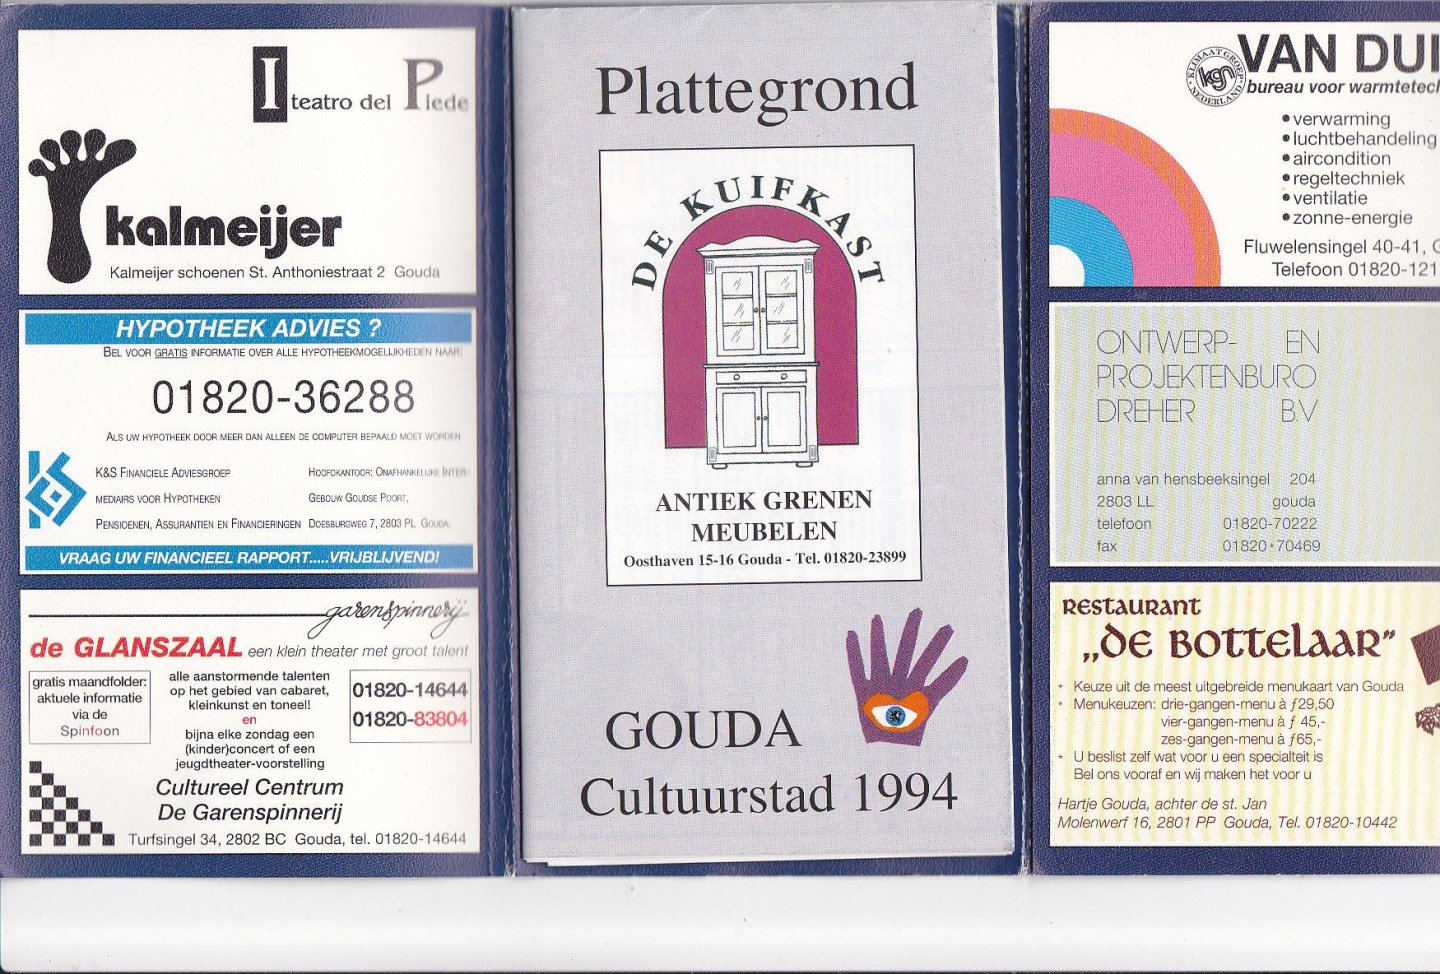  - Gouda Cultuur- en Theatergids 1993-94 met plattegrond